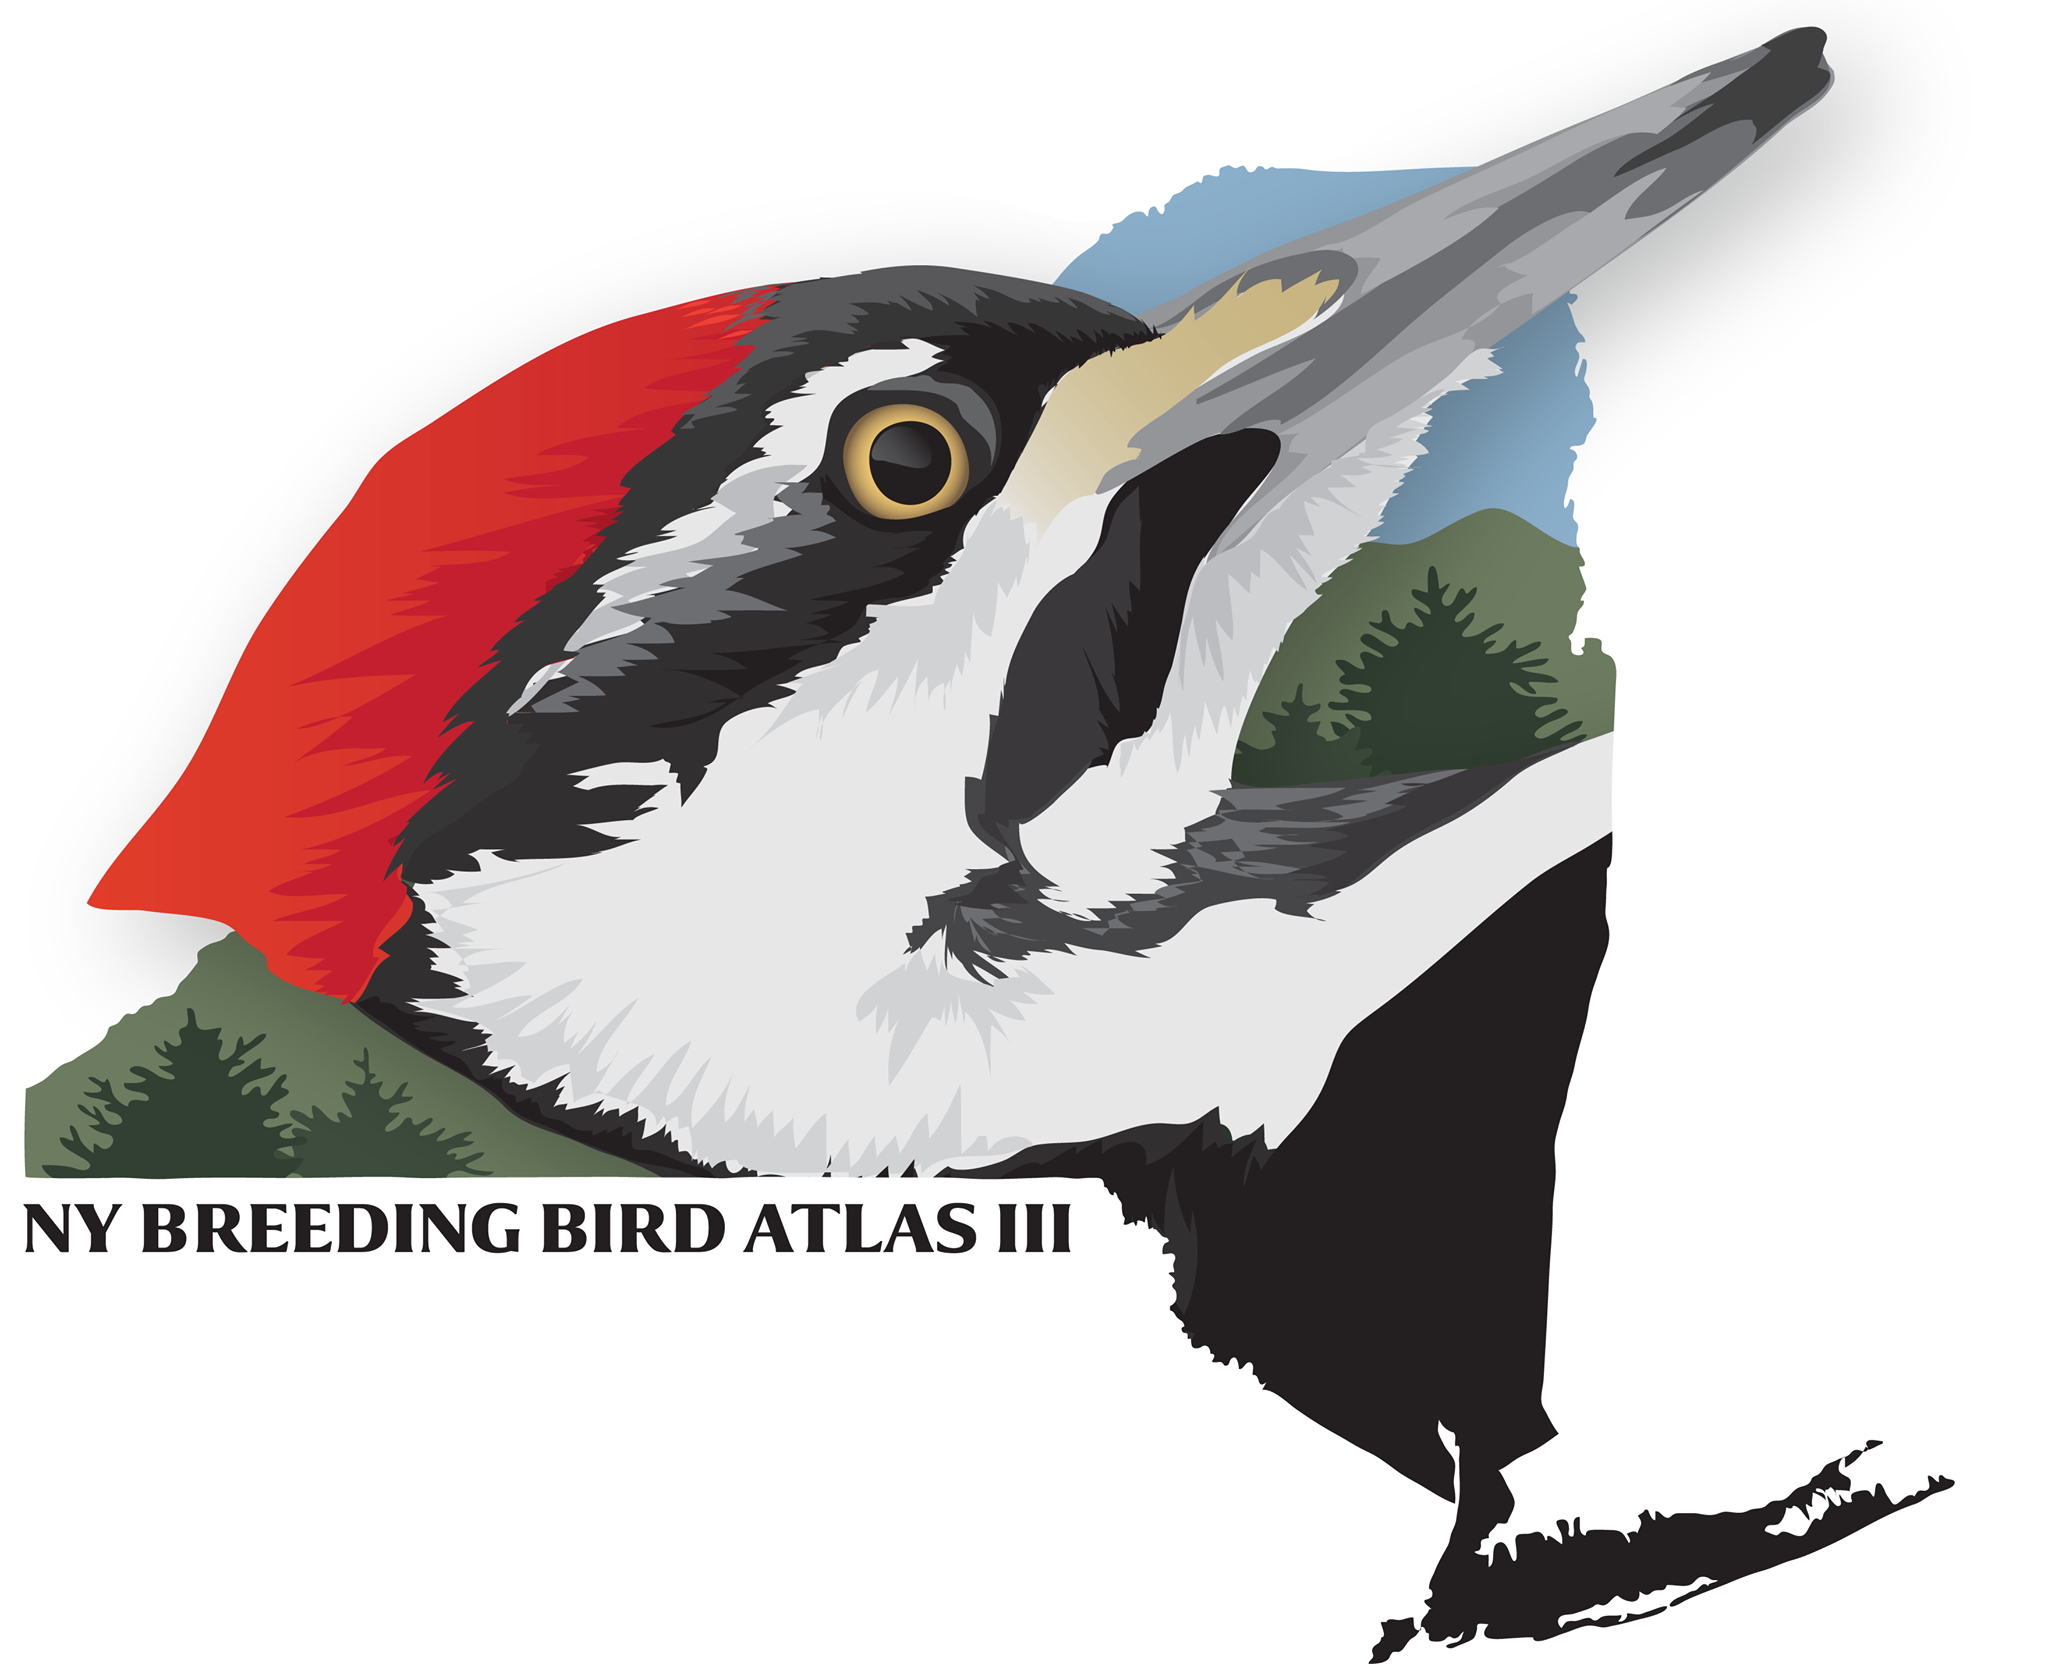 The New York State Breeding Bird Atlas III runs from 2020 to 2024. Image: New York State Breeding Bird Atlas